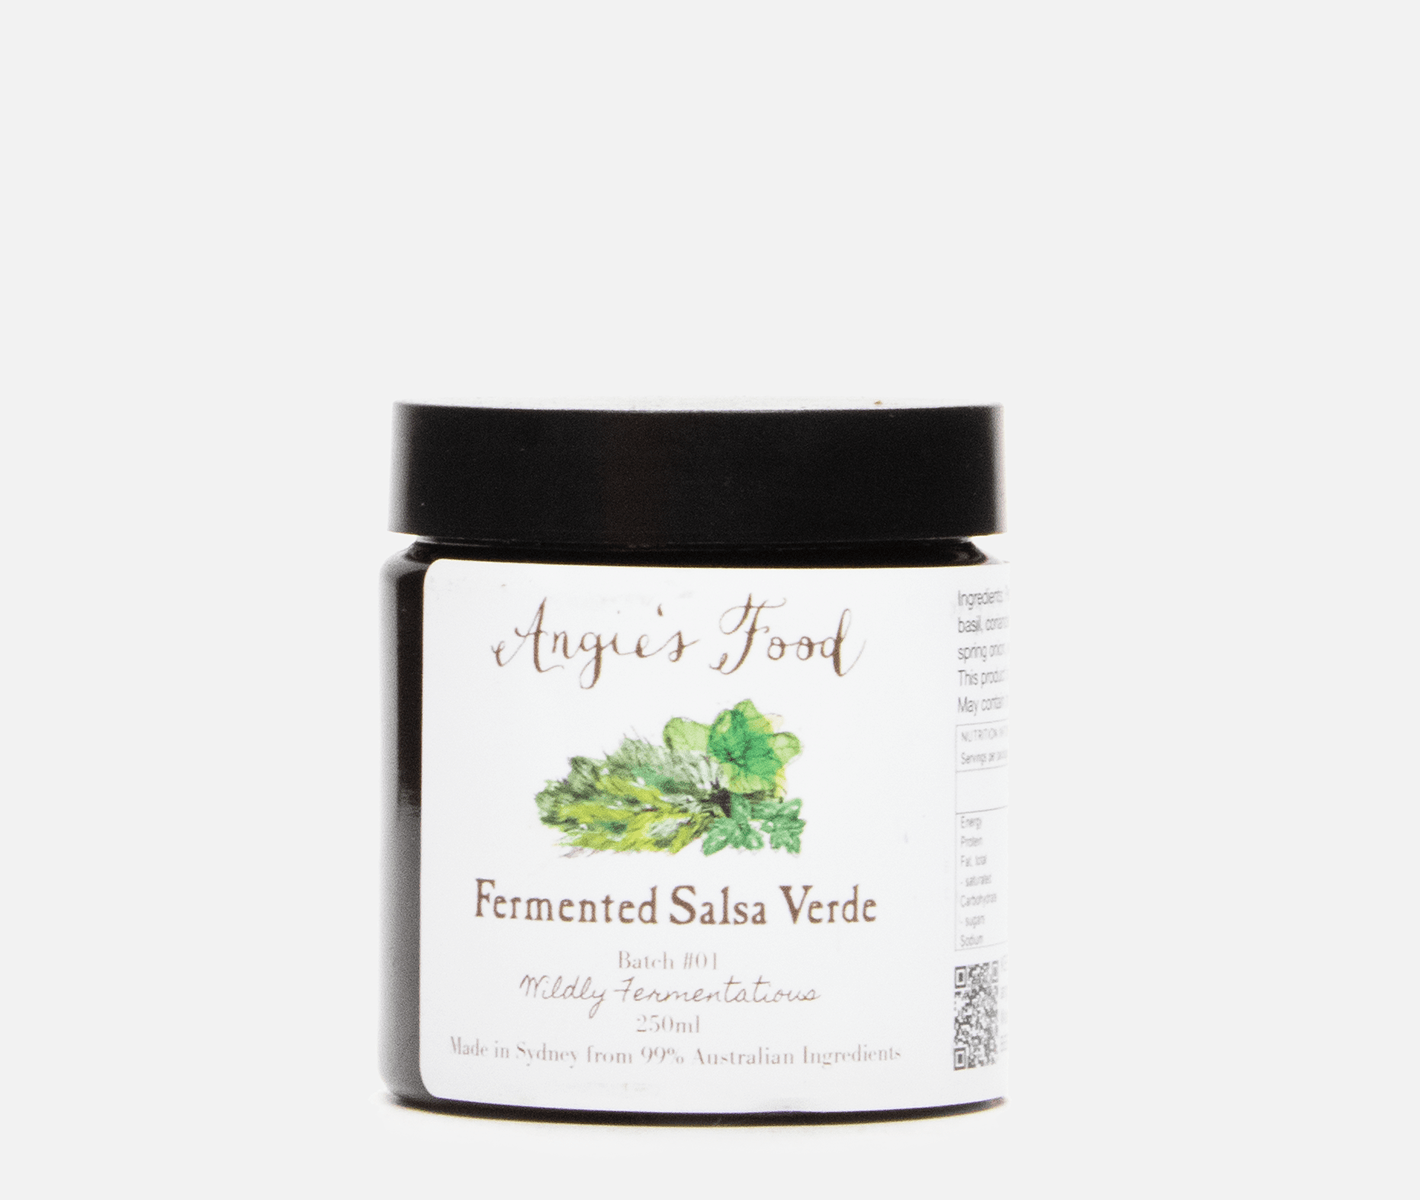 Angie's Food Fermented Salsa Verde (120g) - DRNKS